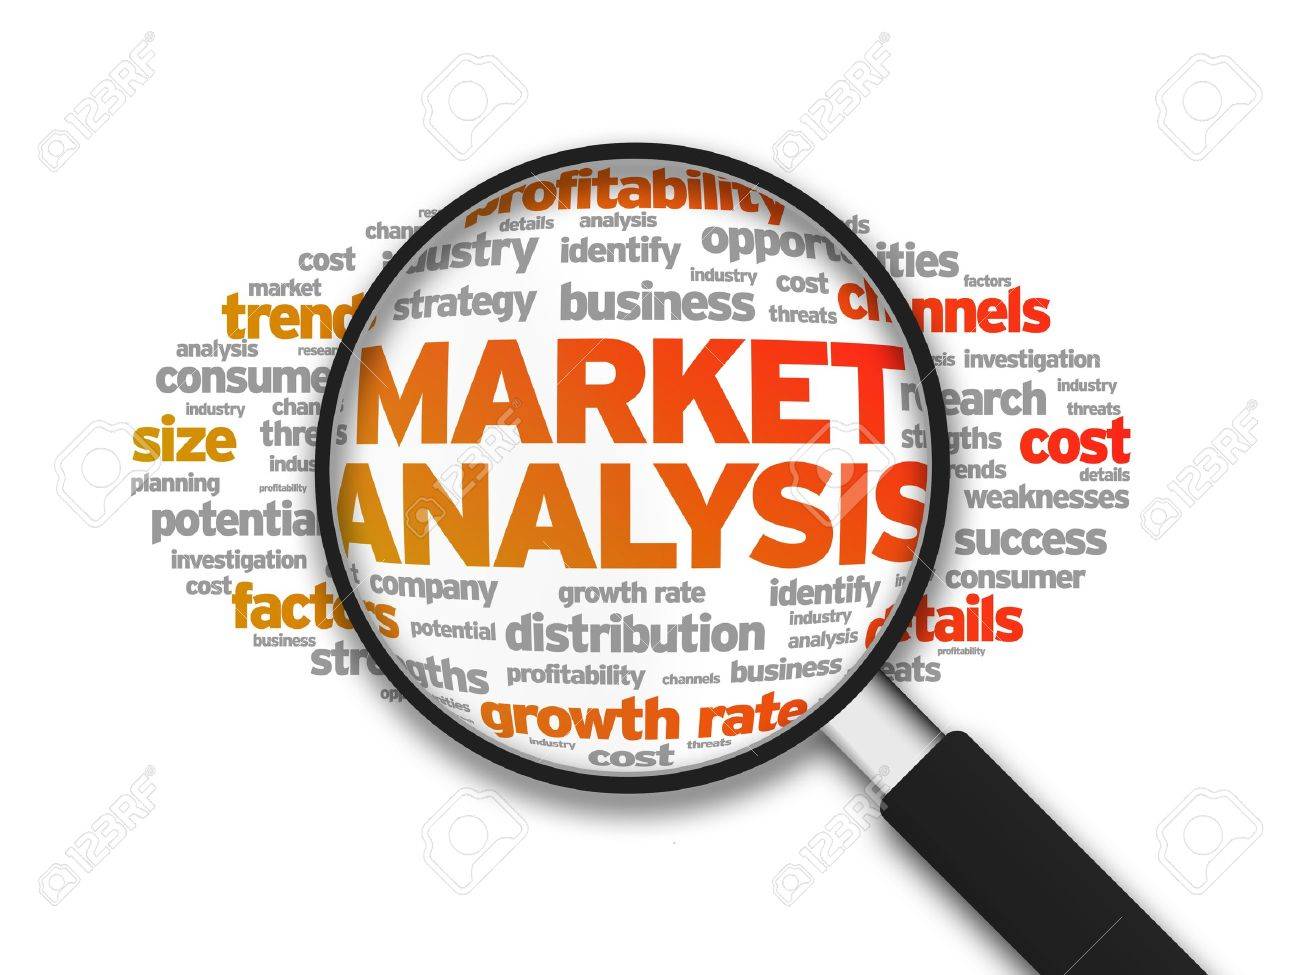 Trends & Market Analysis